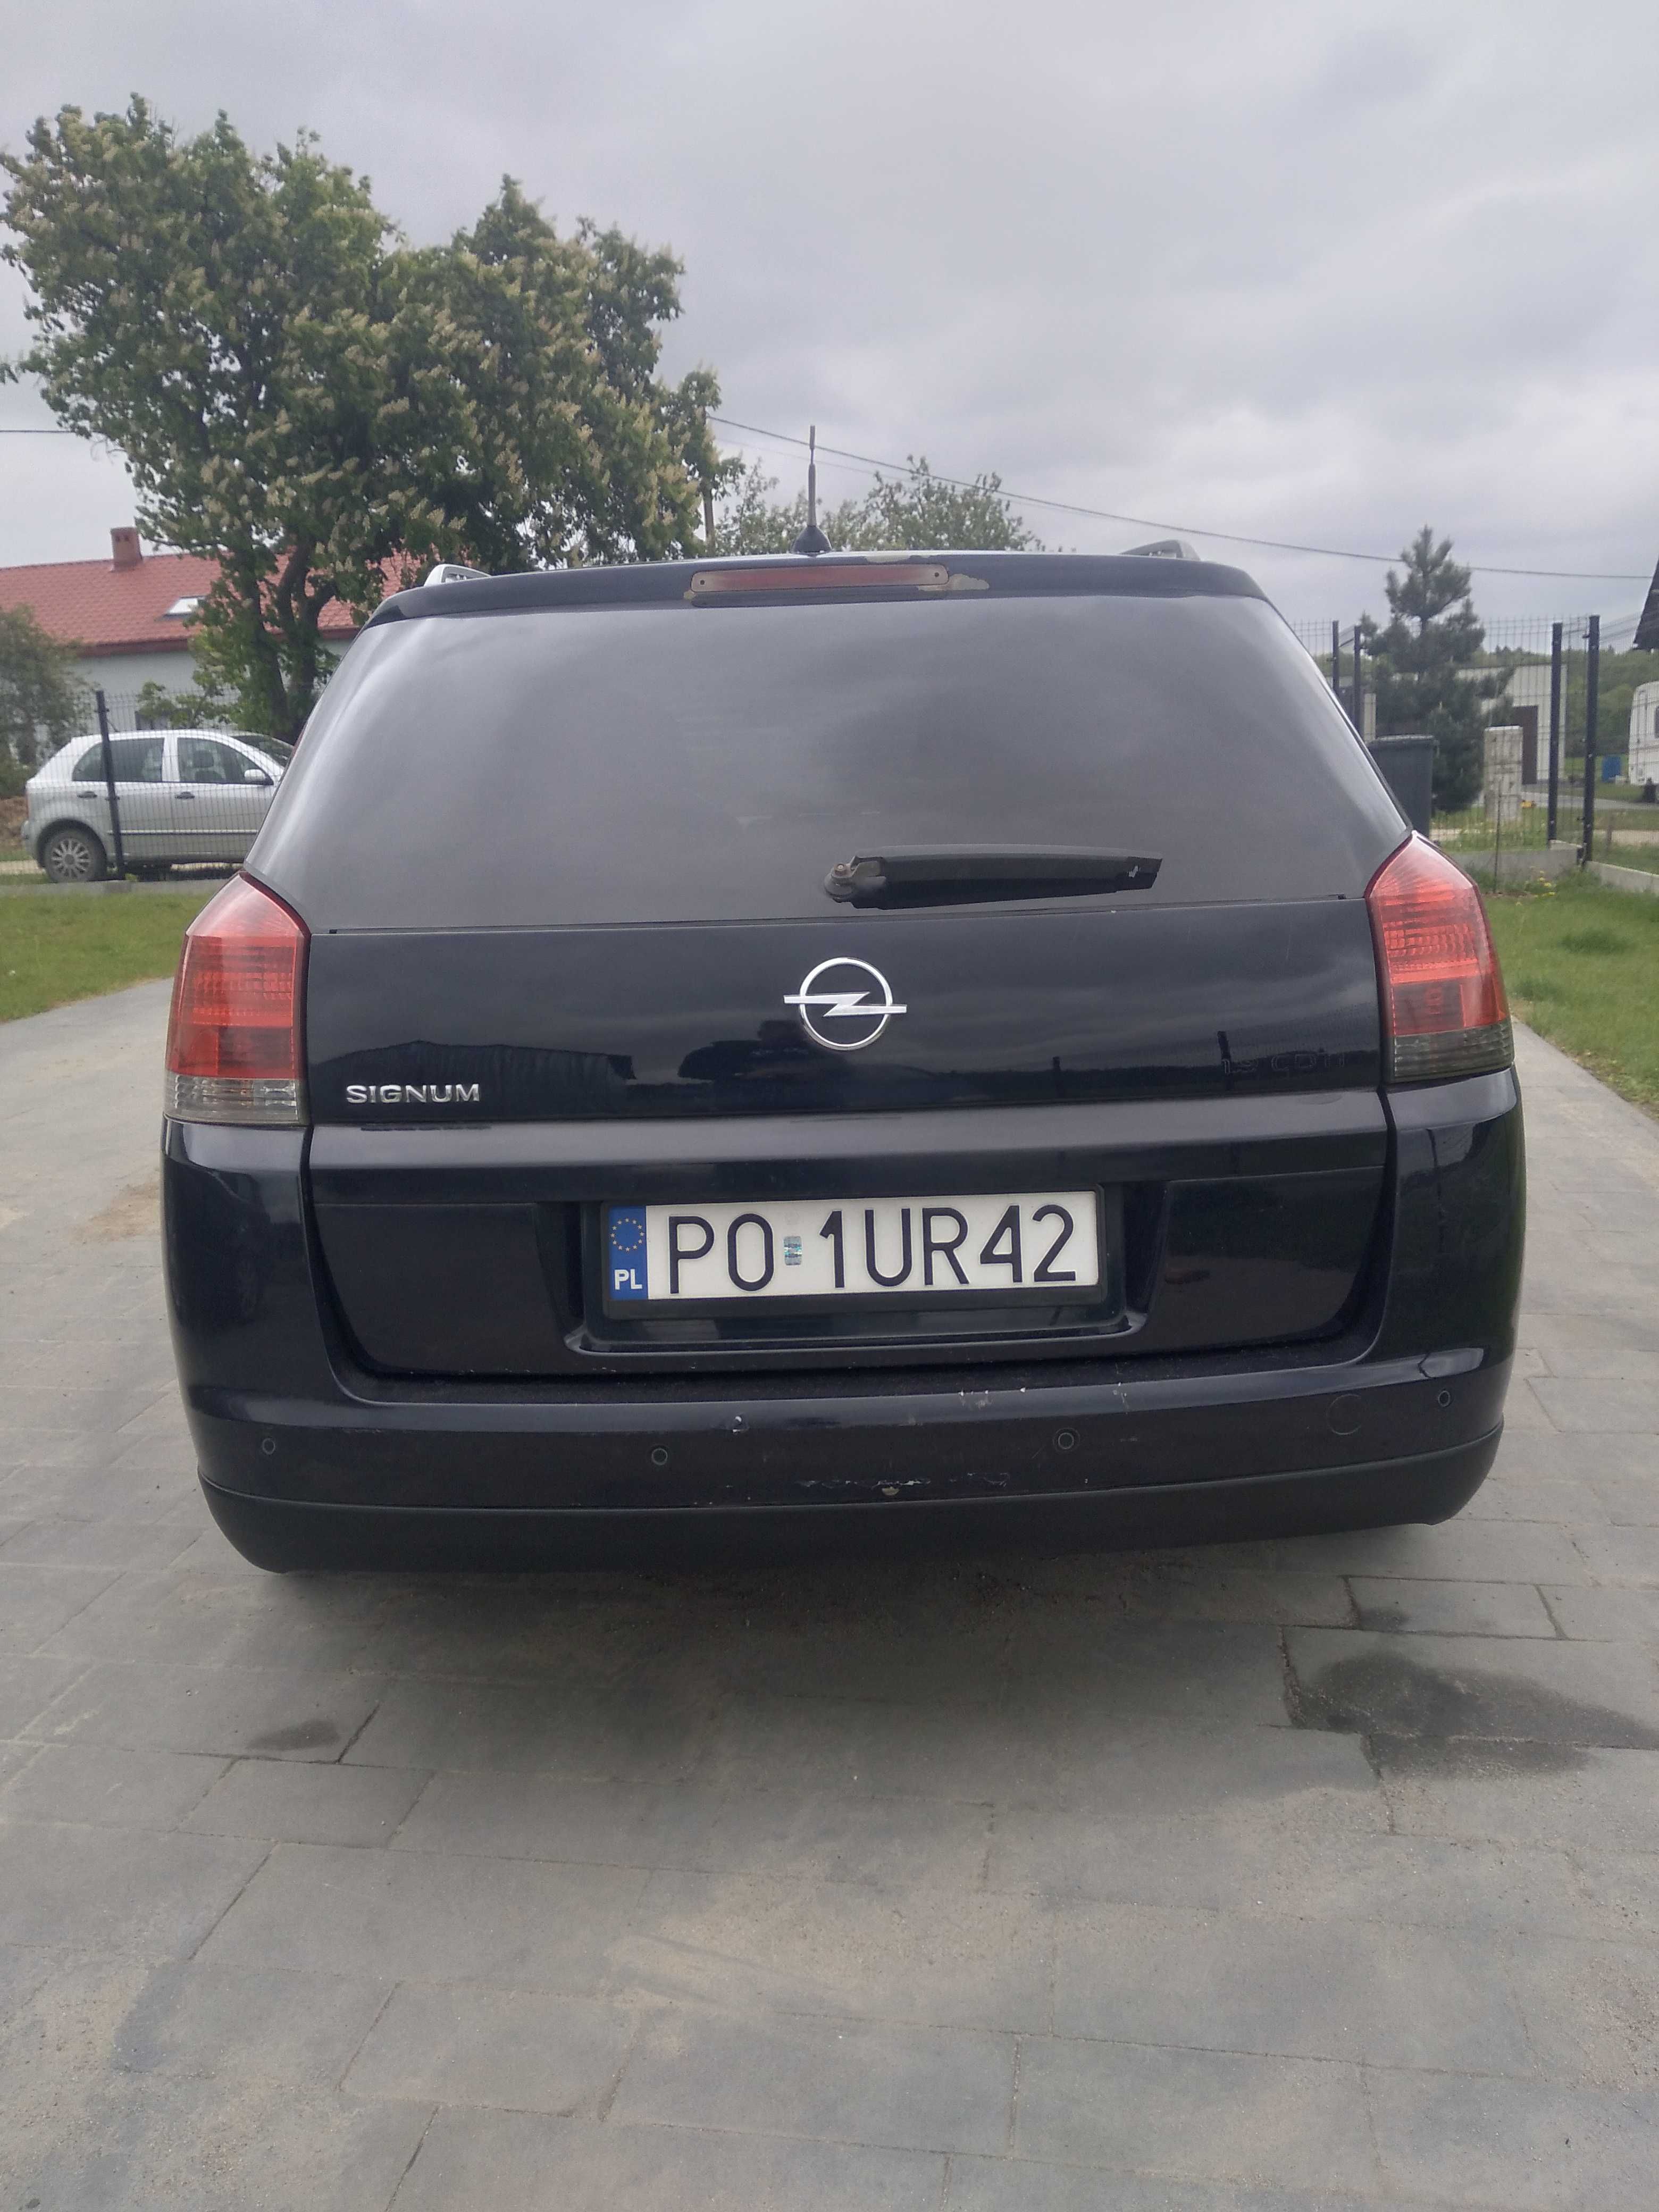 Opel signum 1.9 td 2004r 150 km bogato wyposażony